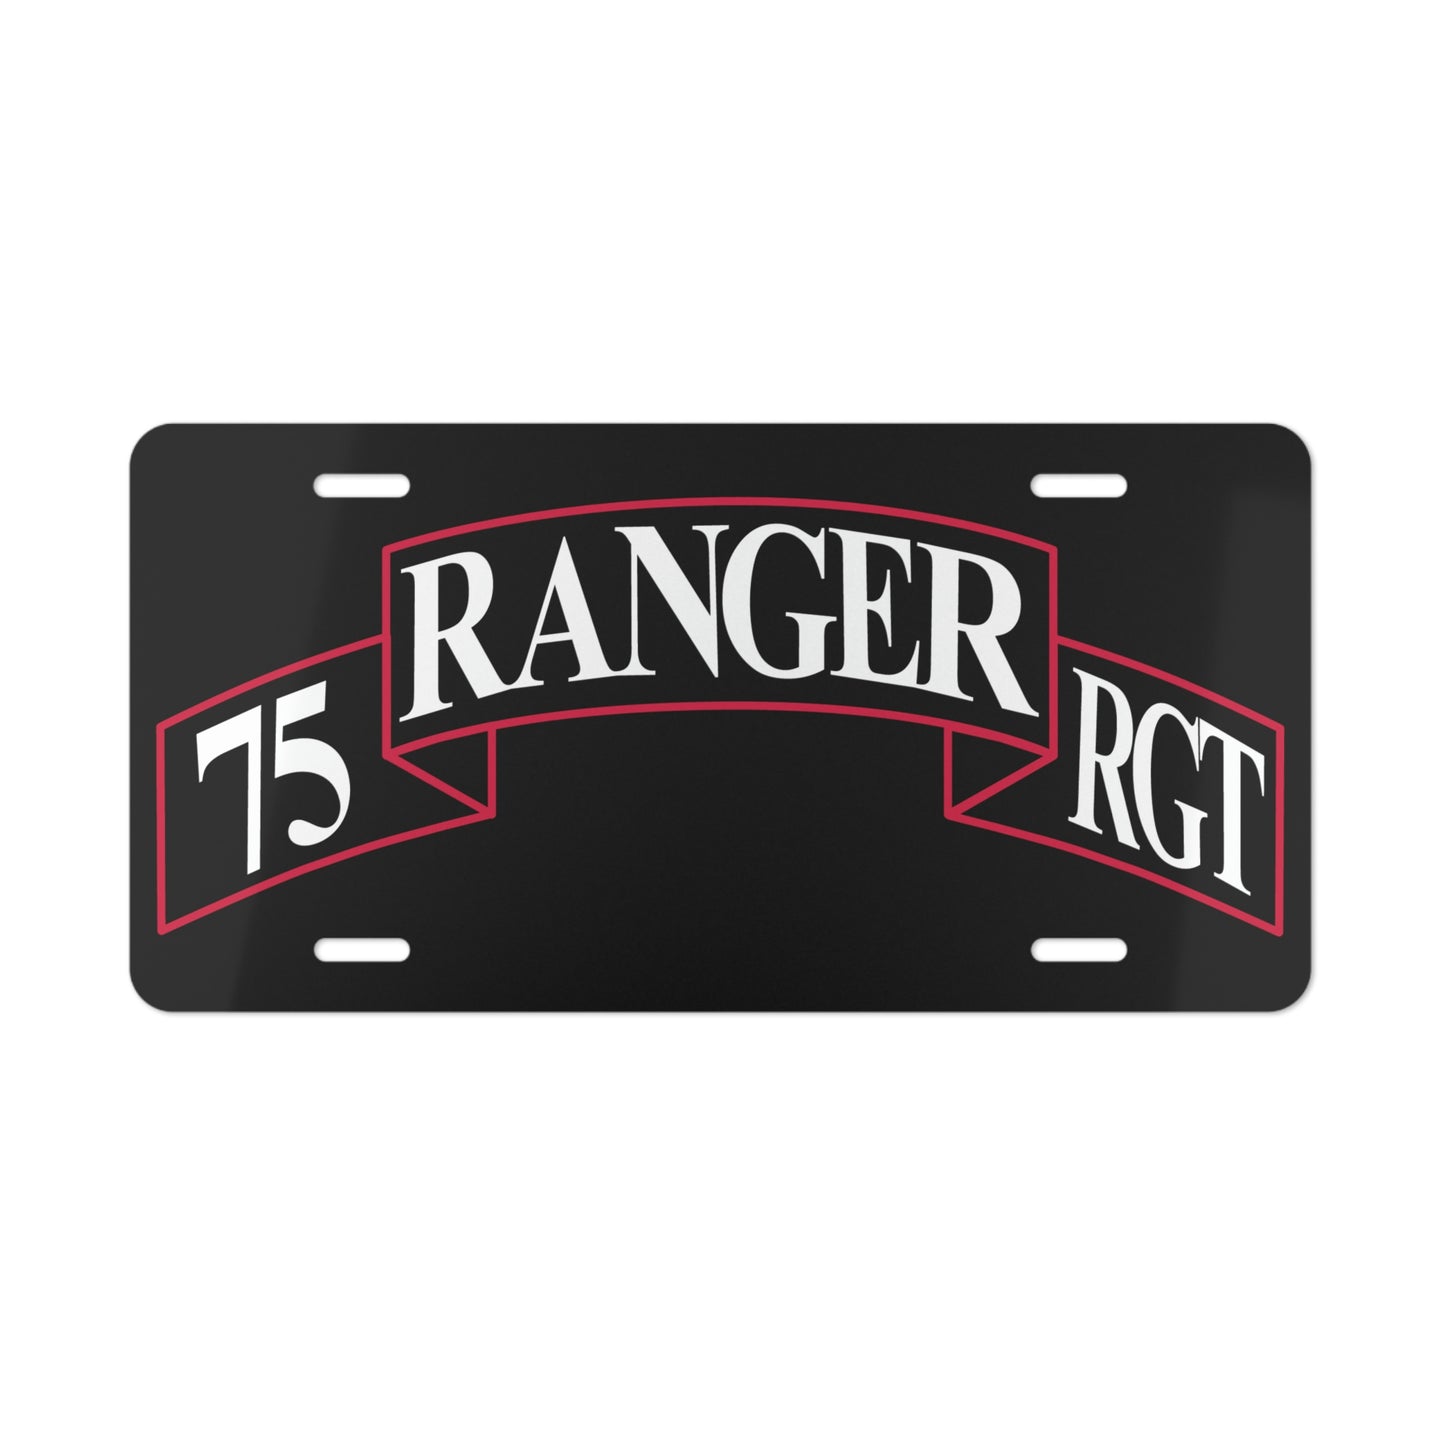 75th Ranger Regimental Scroll Black License Plate